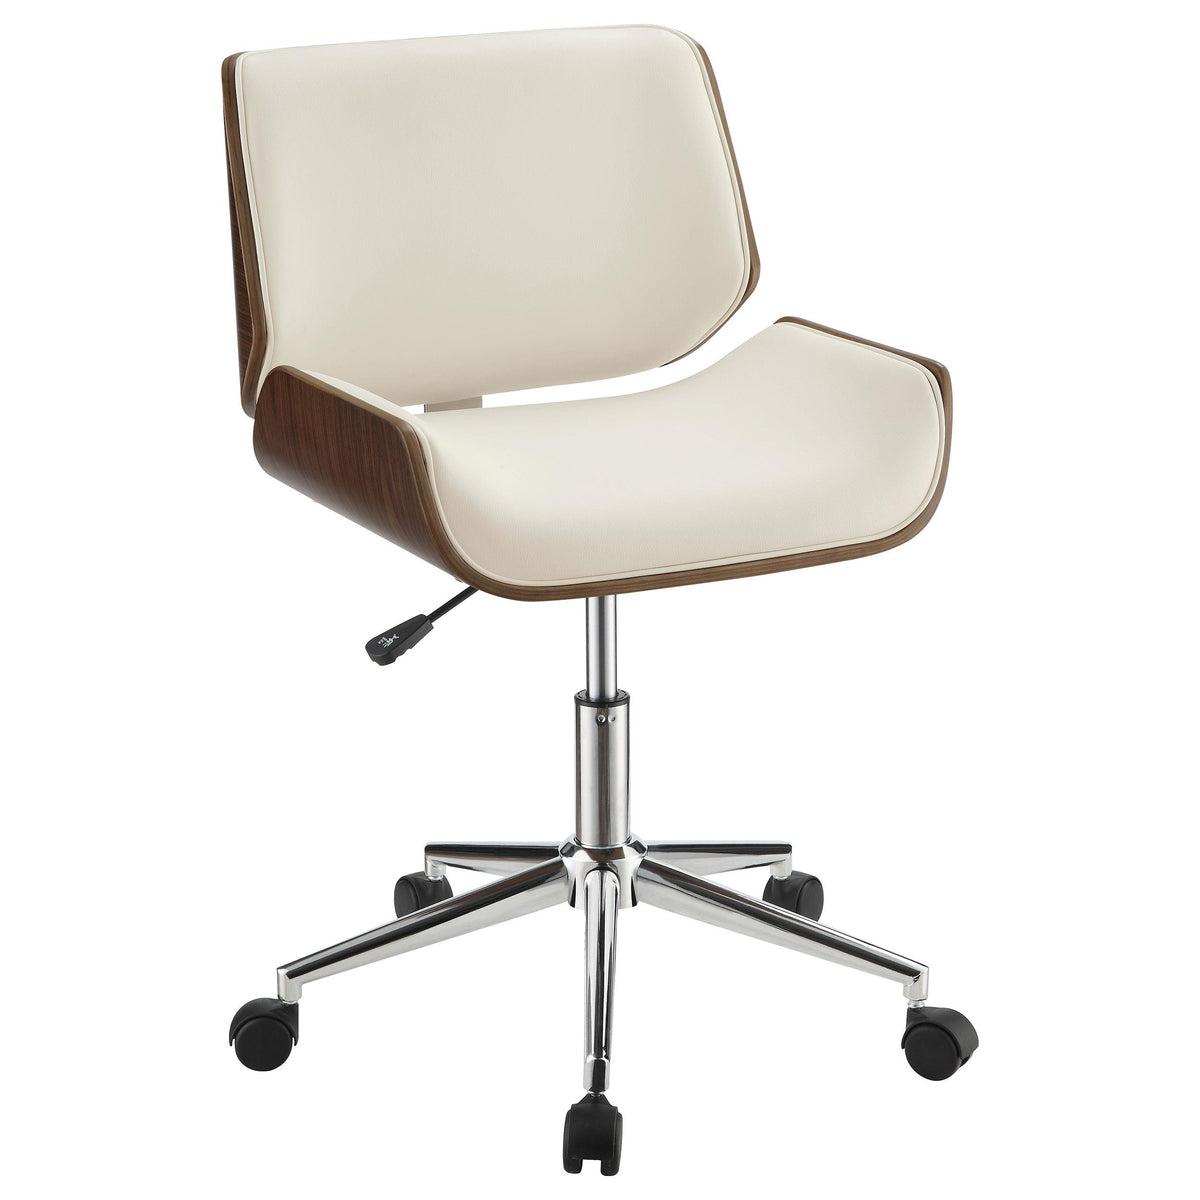 Addington Adjustable Height Office Chair Ecru and Chrome  Las Vegas Furniture Stores